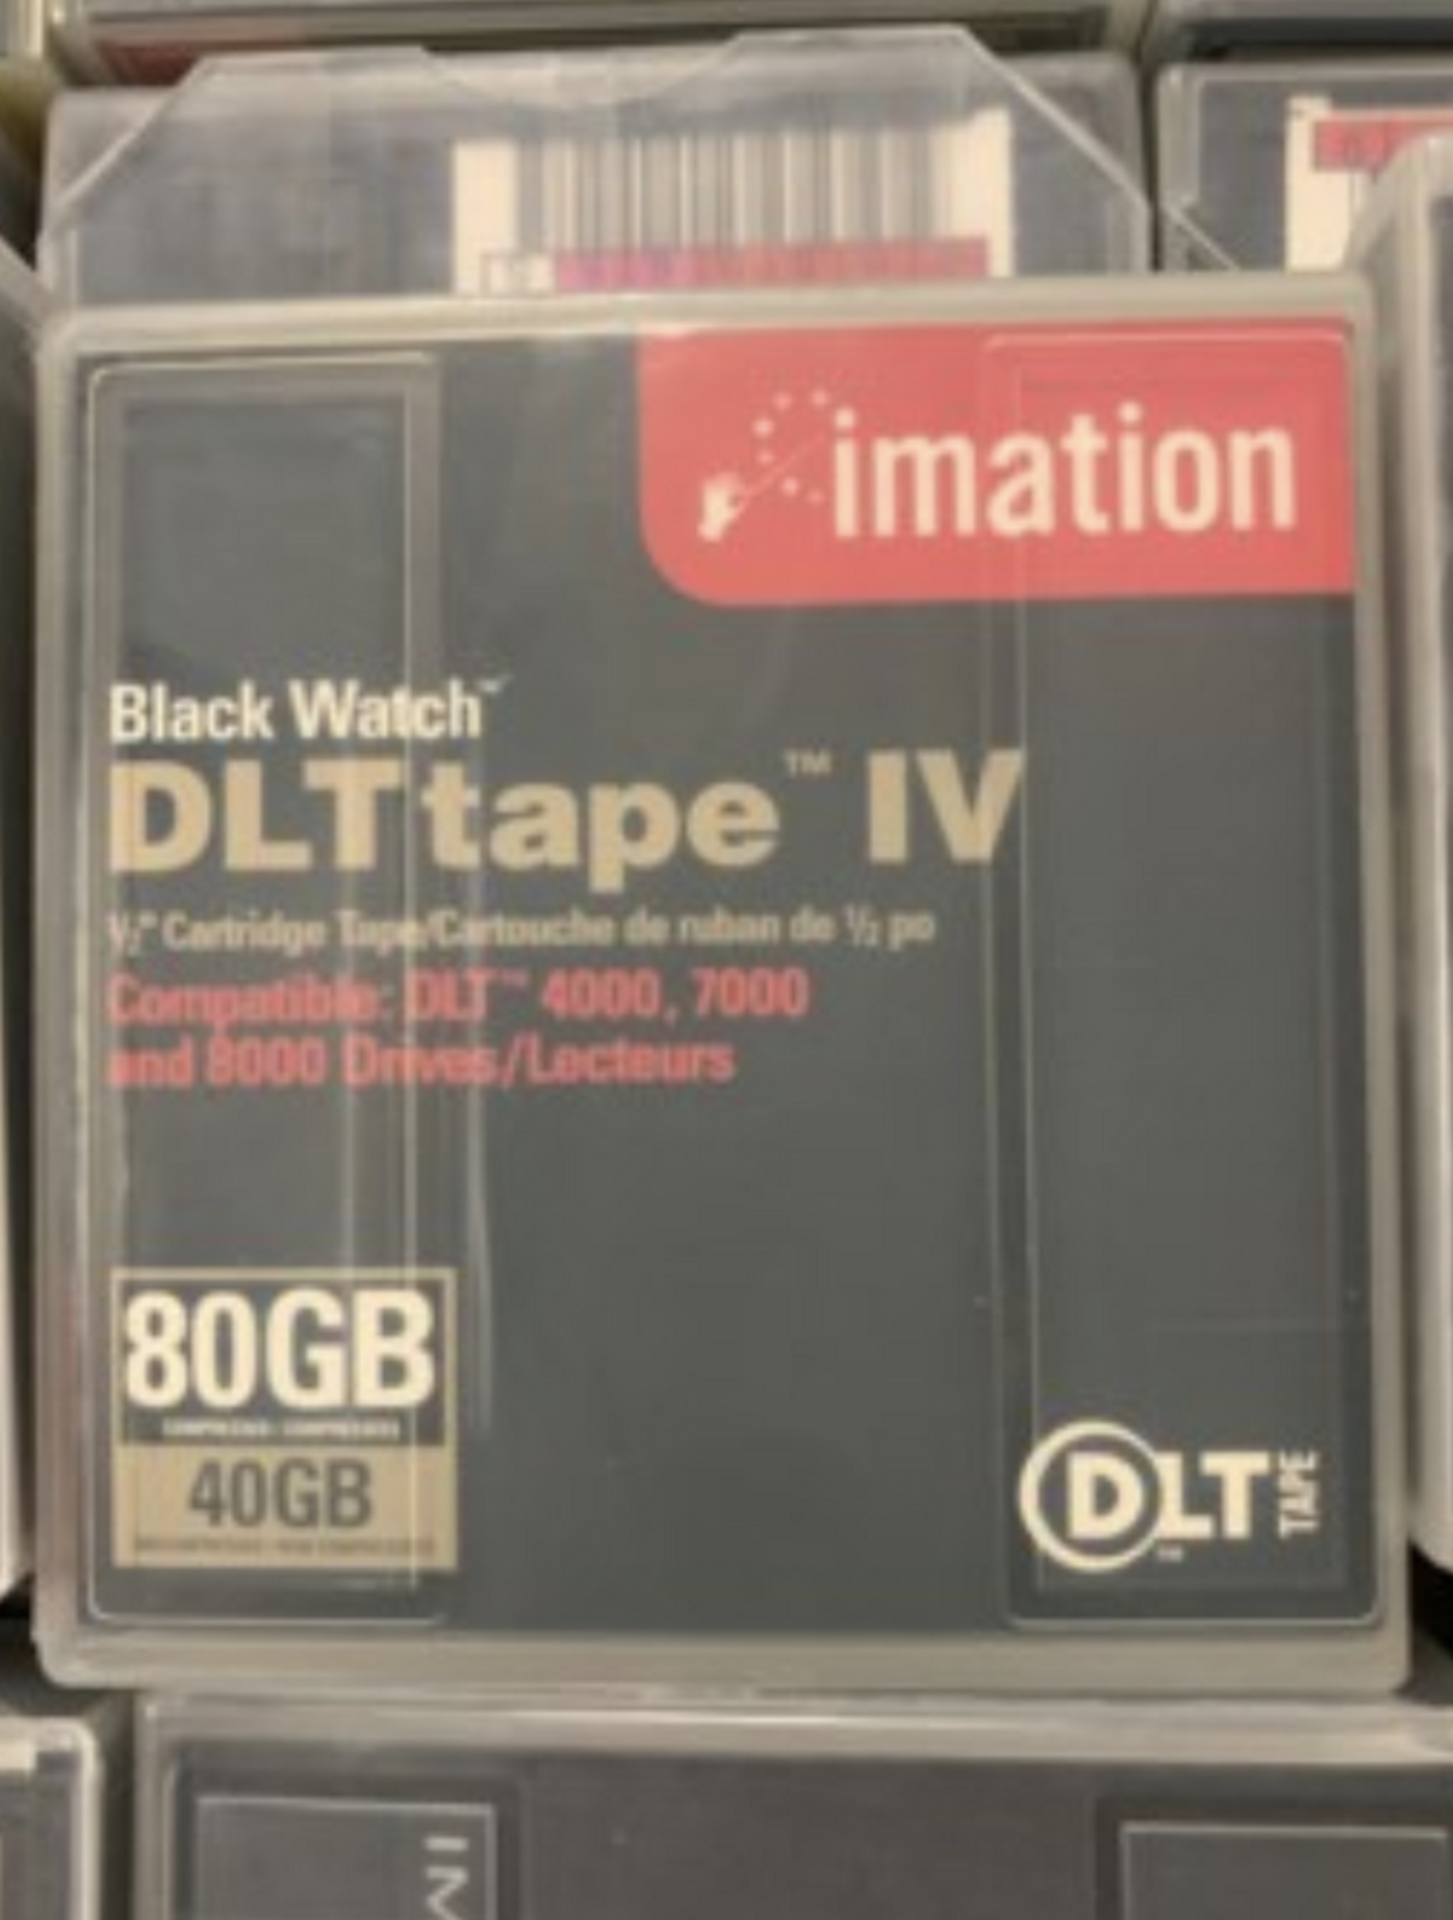 Large lot of Imation DLT Tape IV 80GB Cartridges - Image 2 of 6